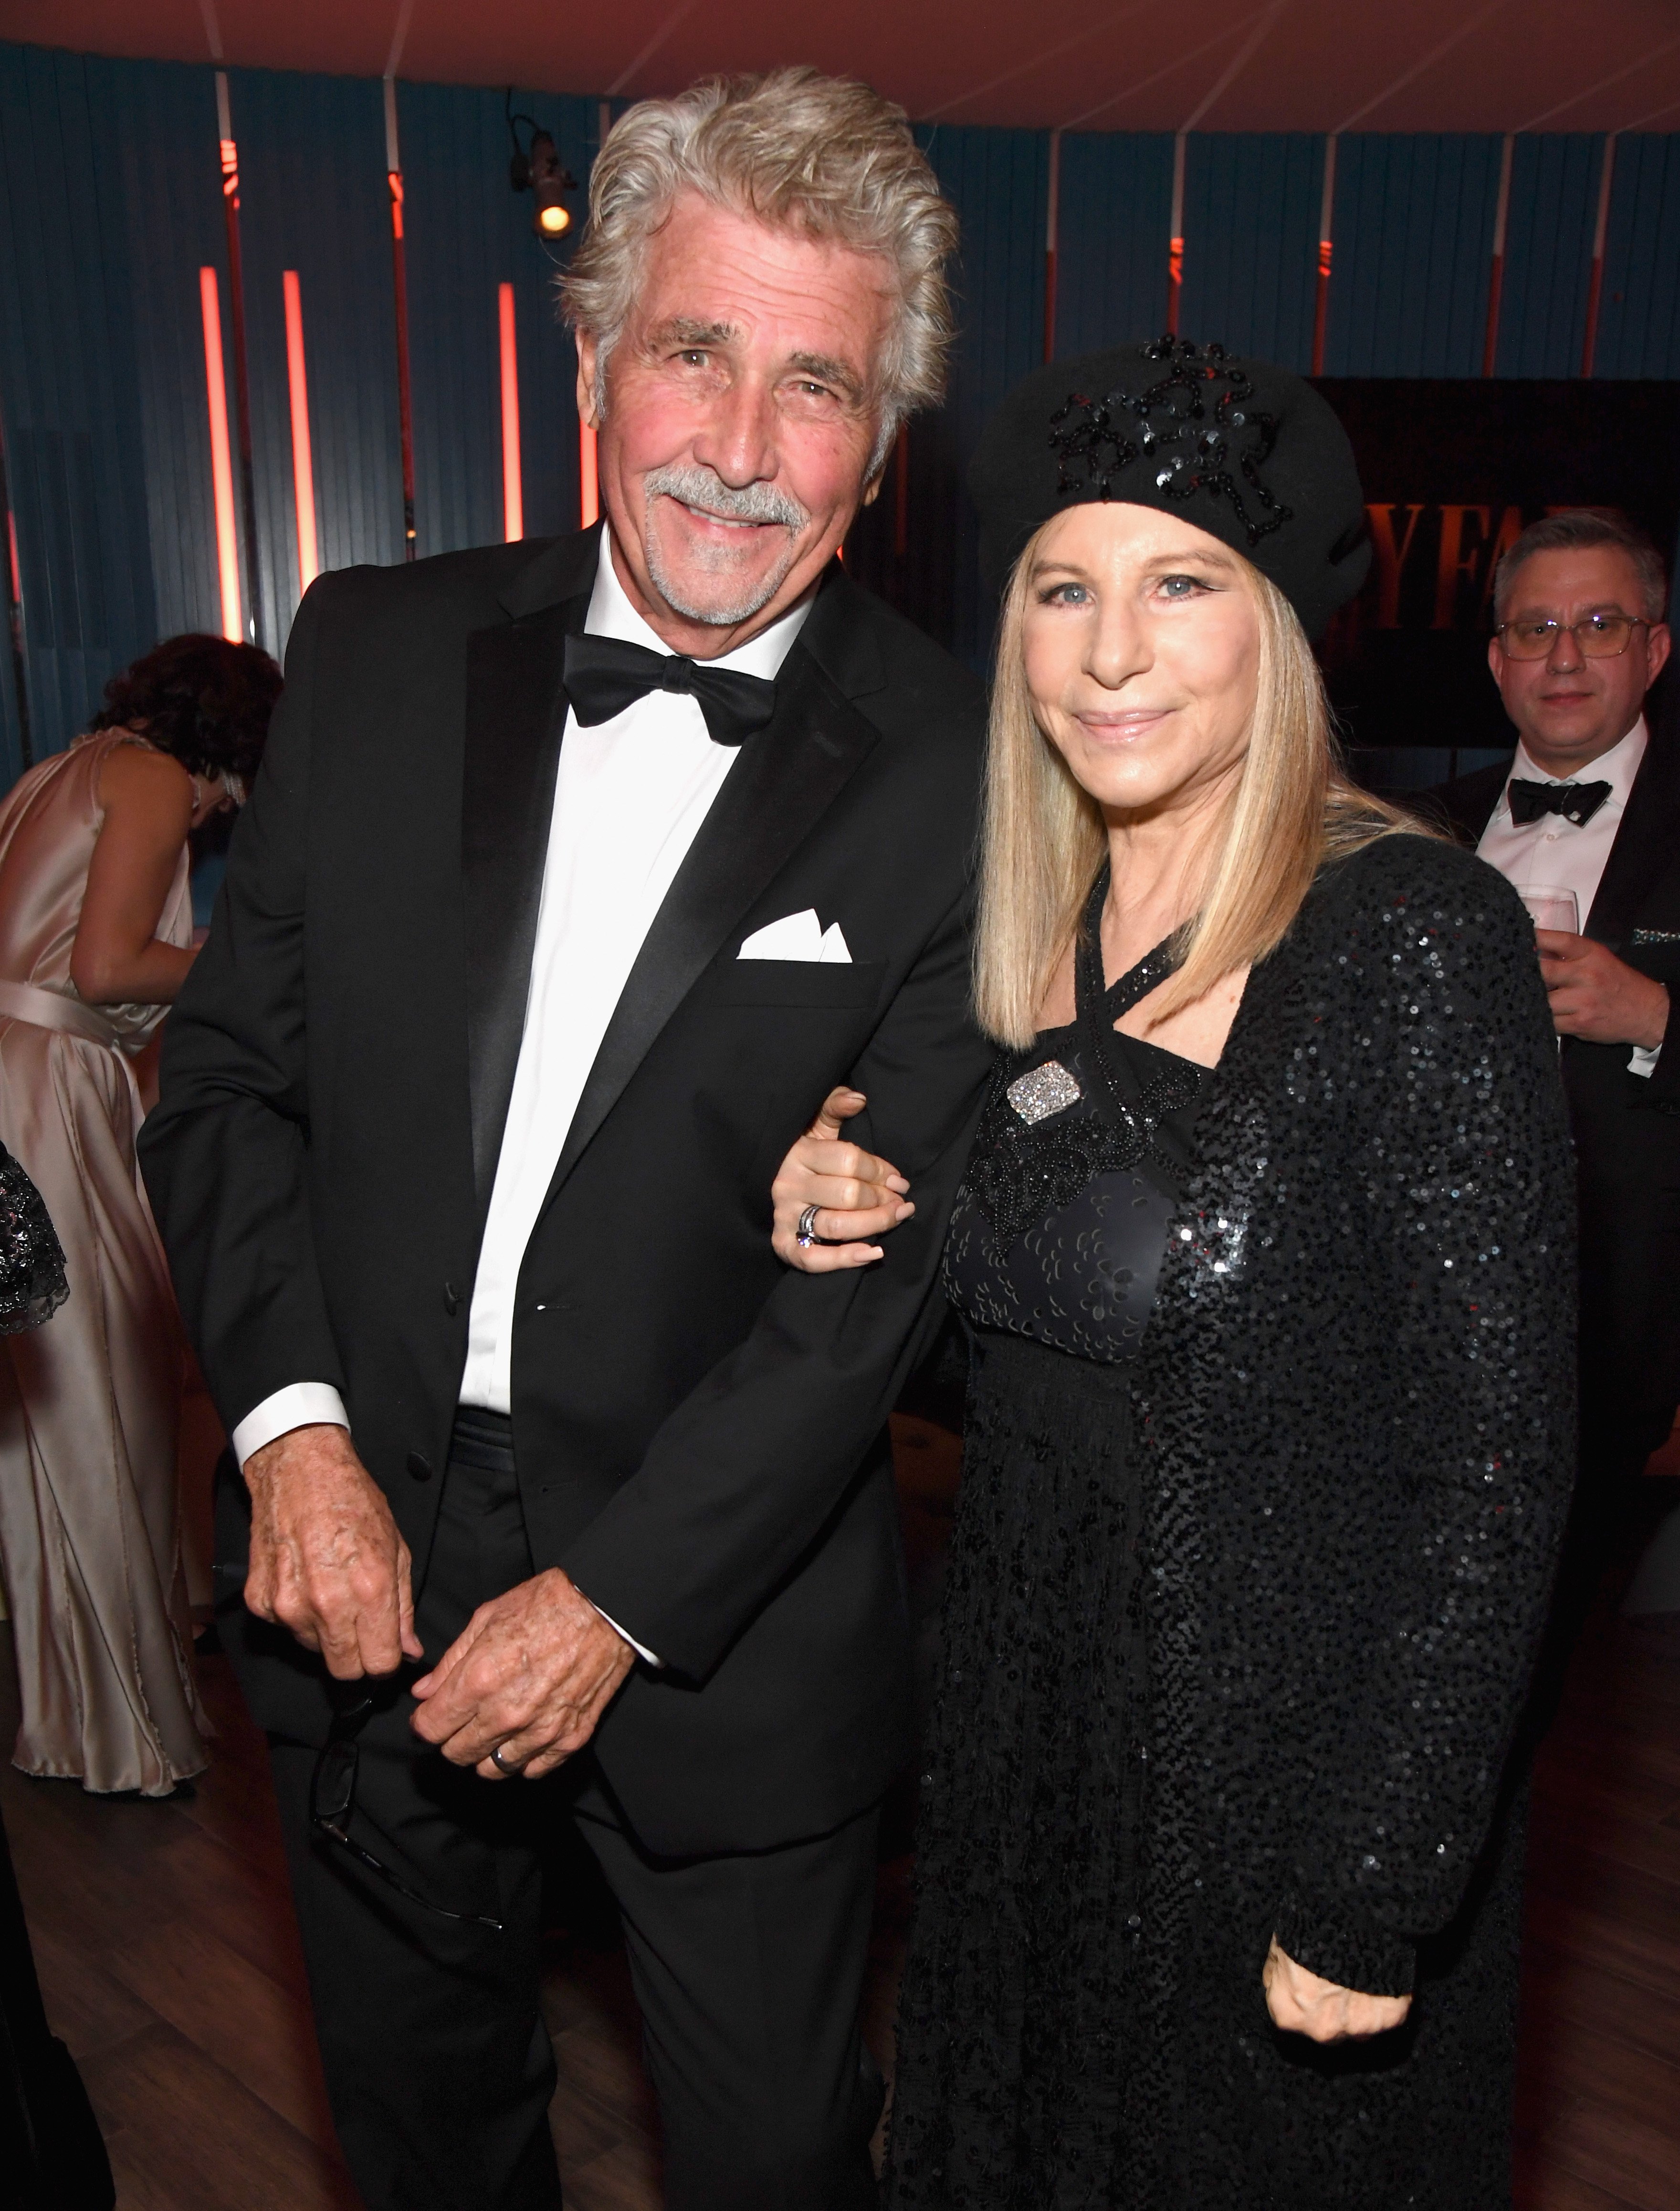 James Brolin Married To Barbra Streisand